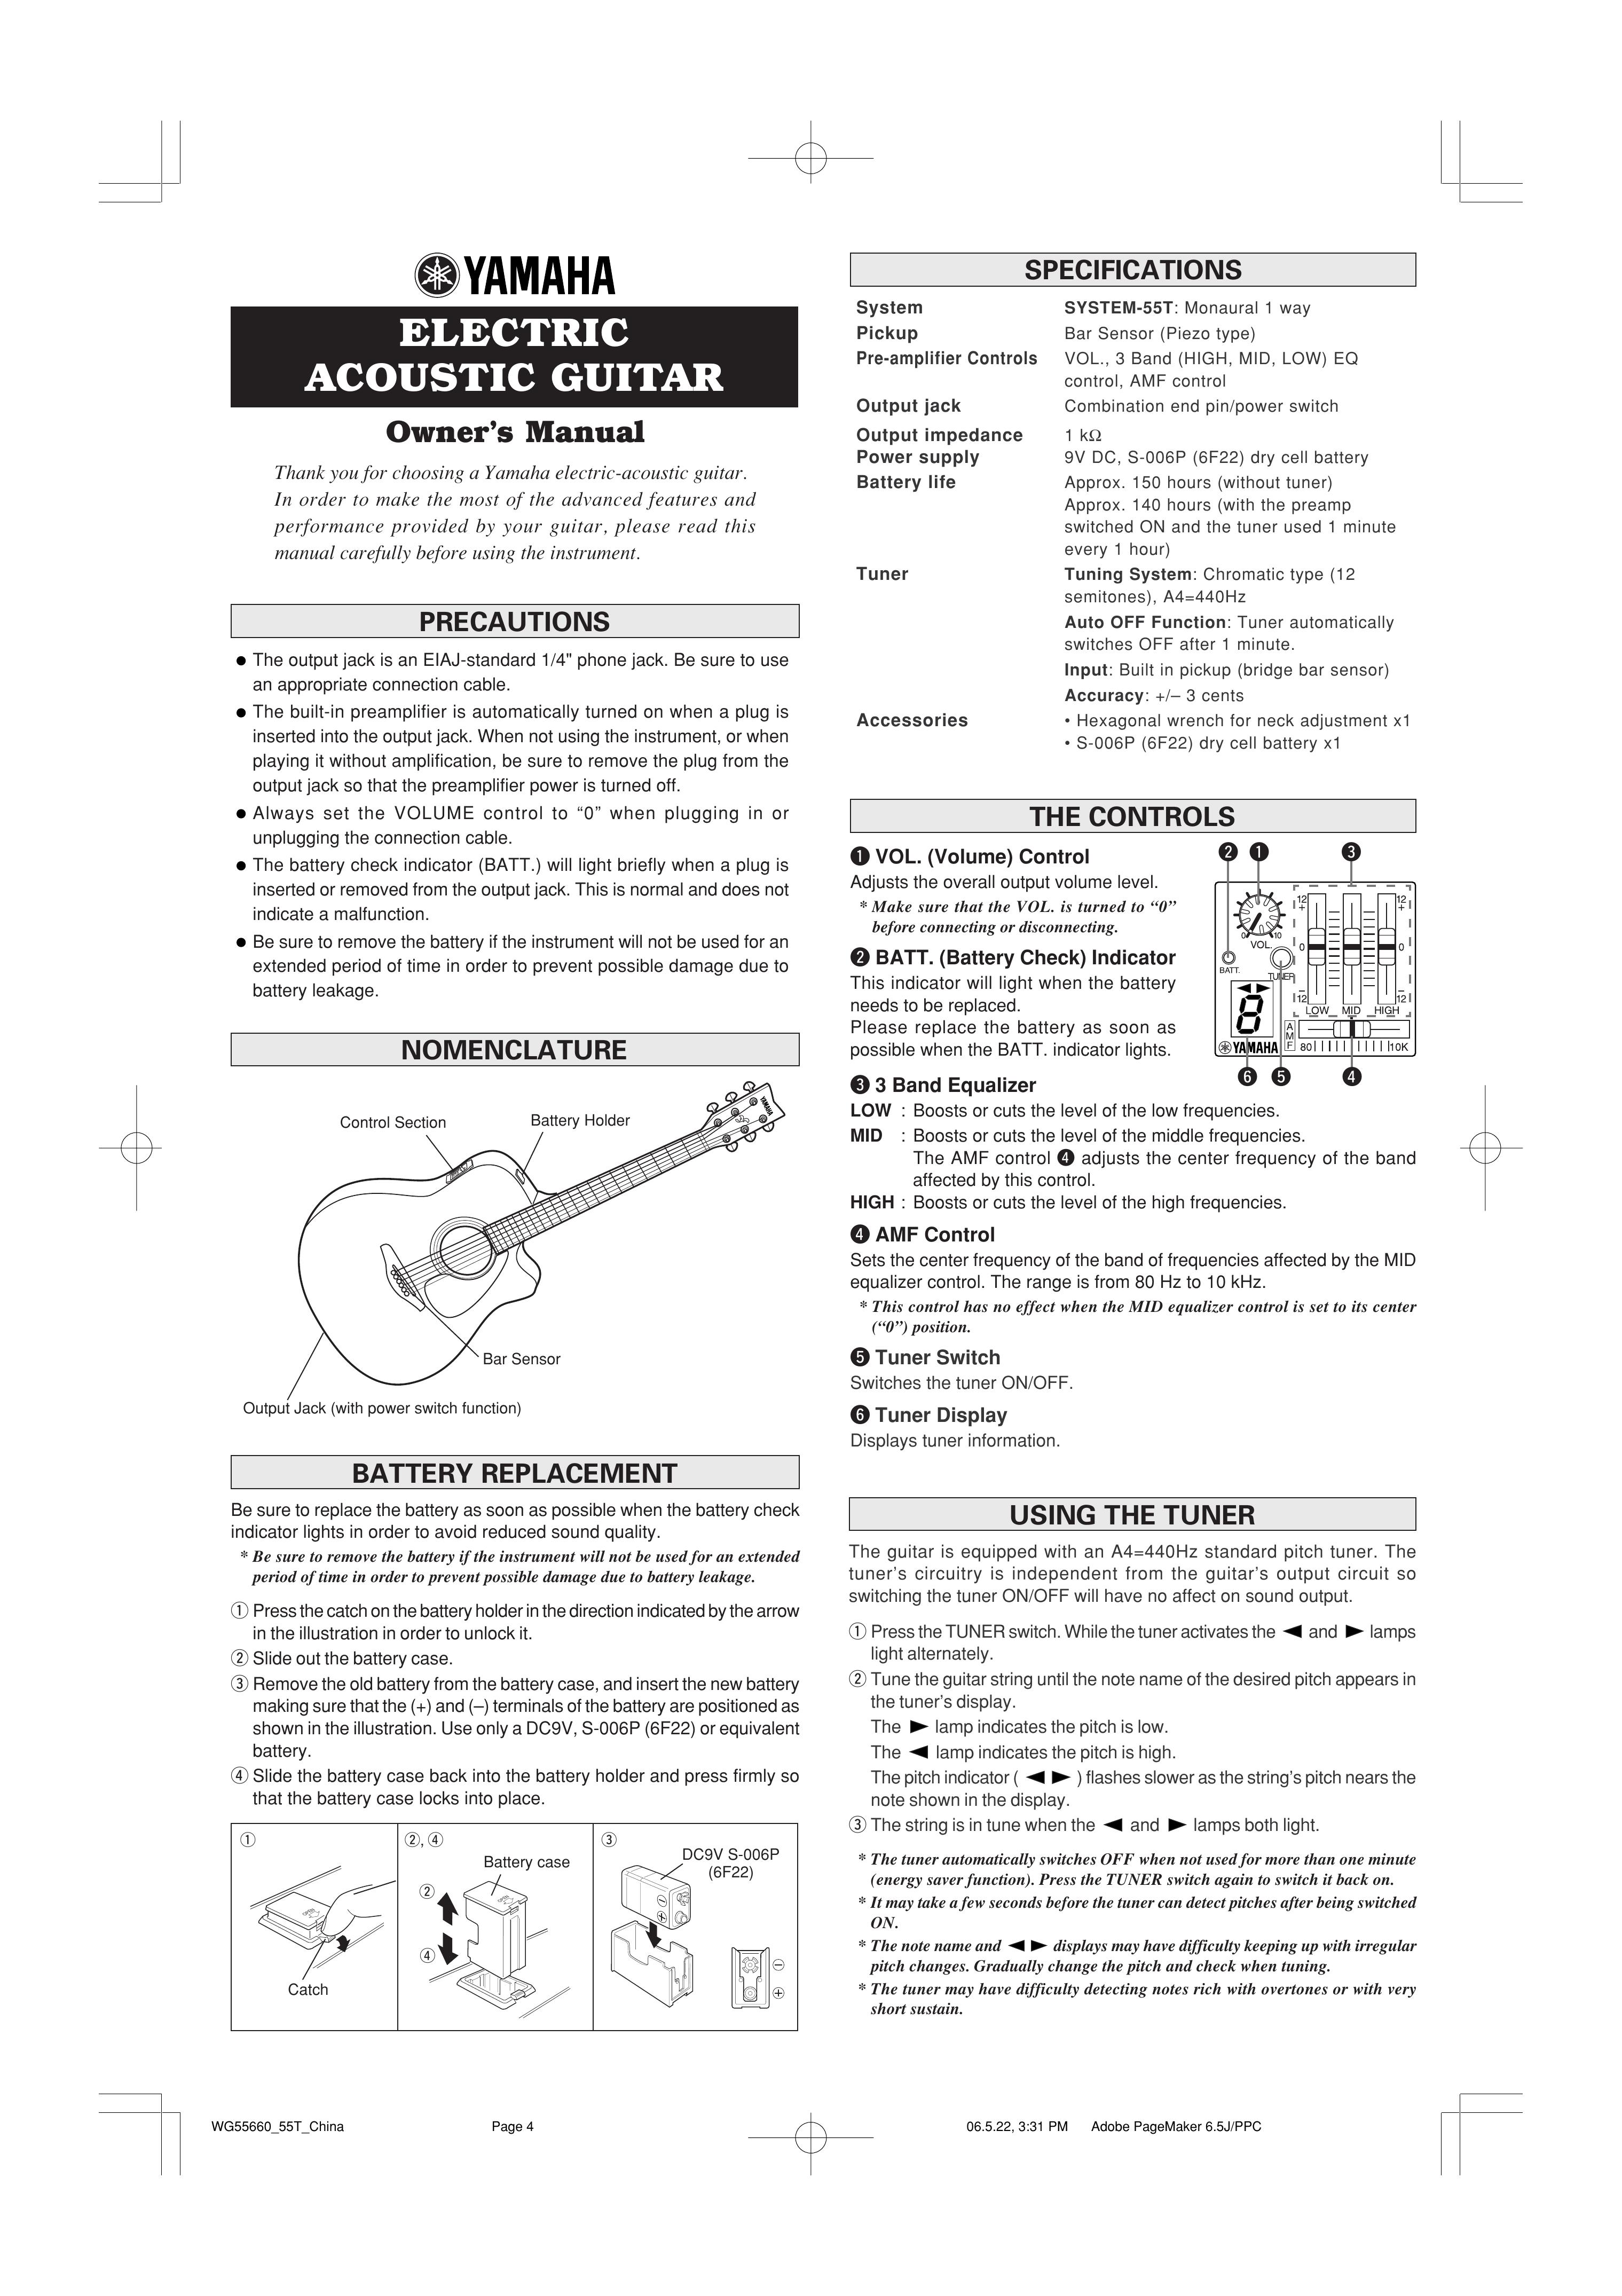 Yamaha Electric Accoustic Guitar Guitar User Manual